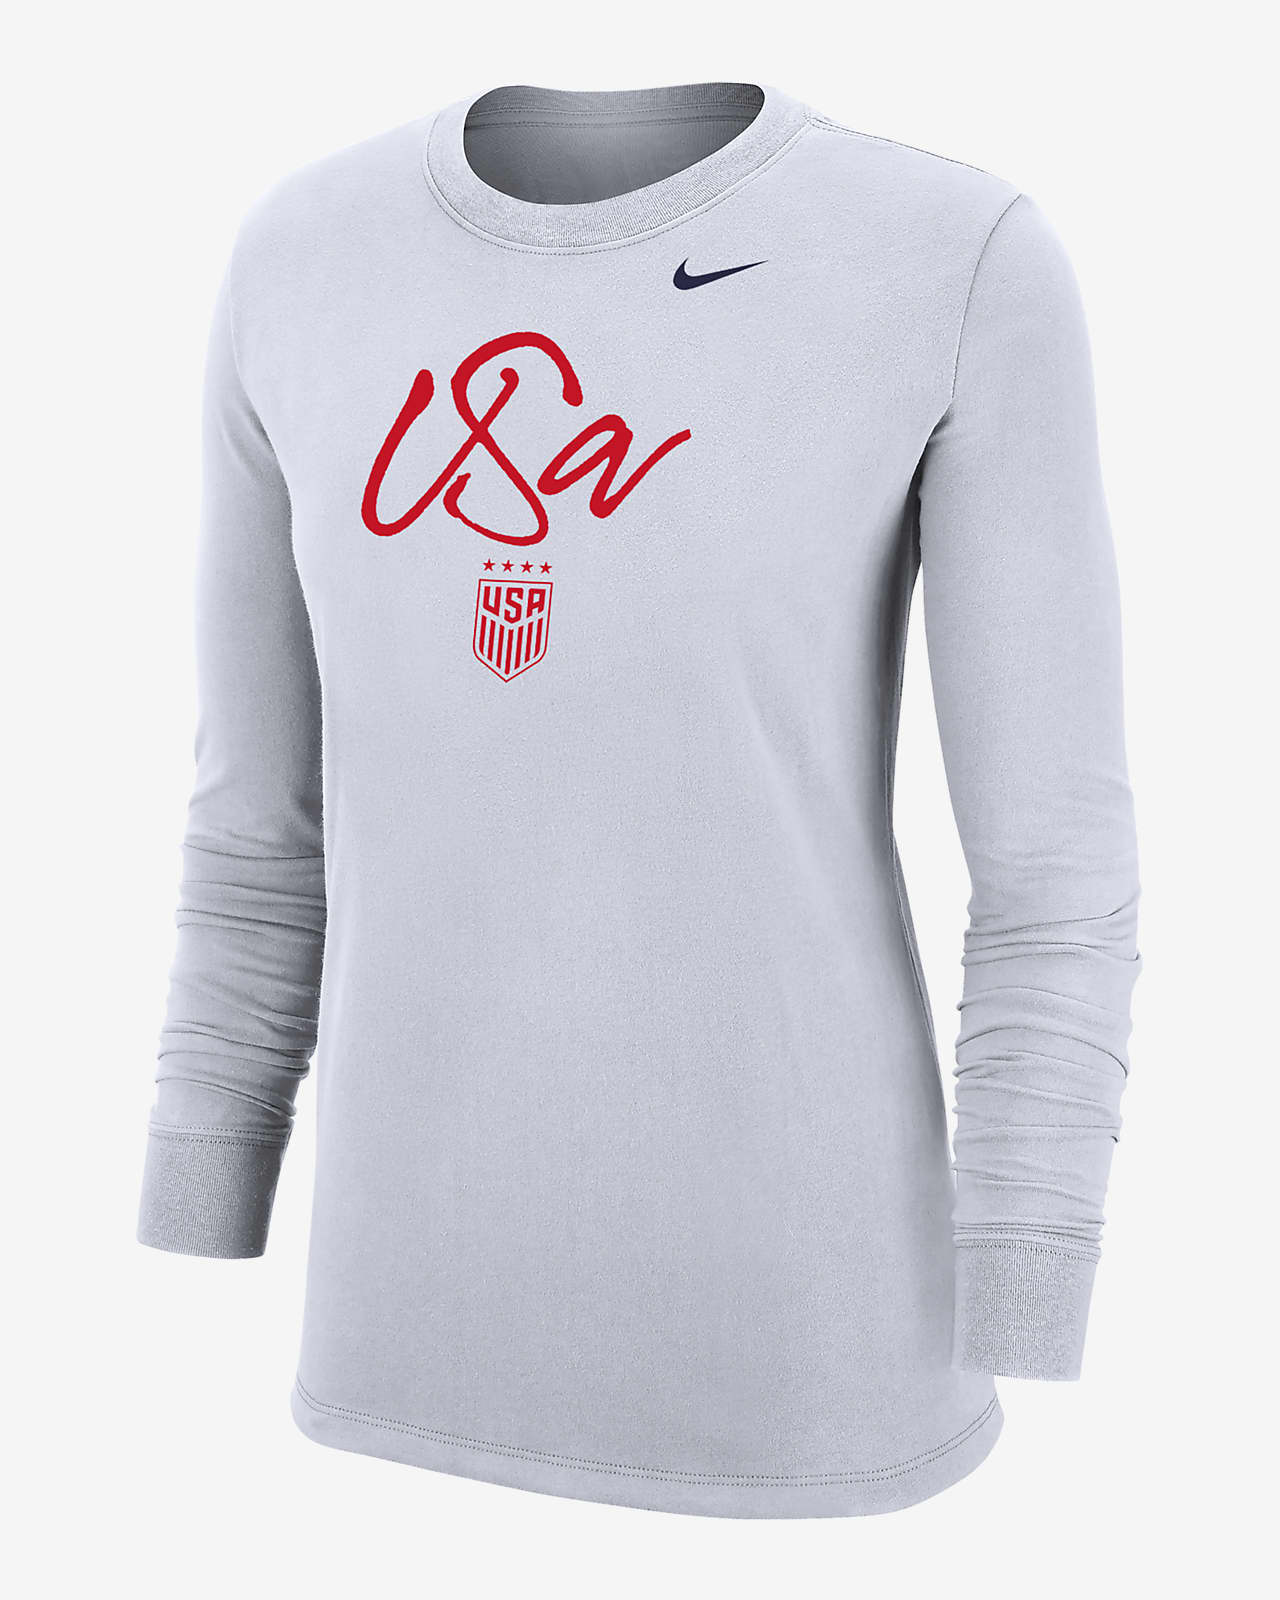 USWNT Women's Nike Soccer Long-Sleeve T-Shirt